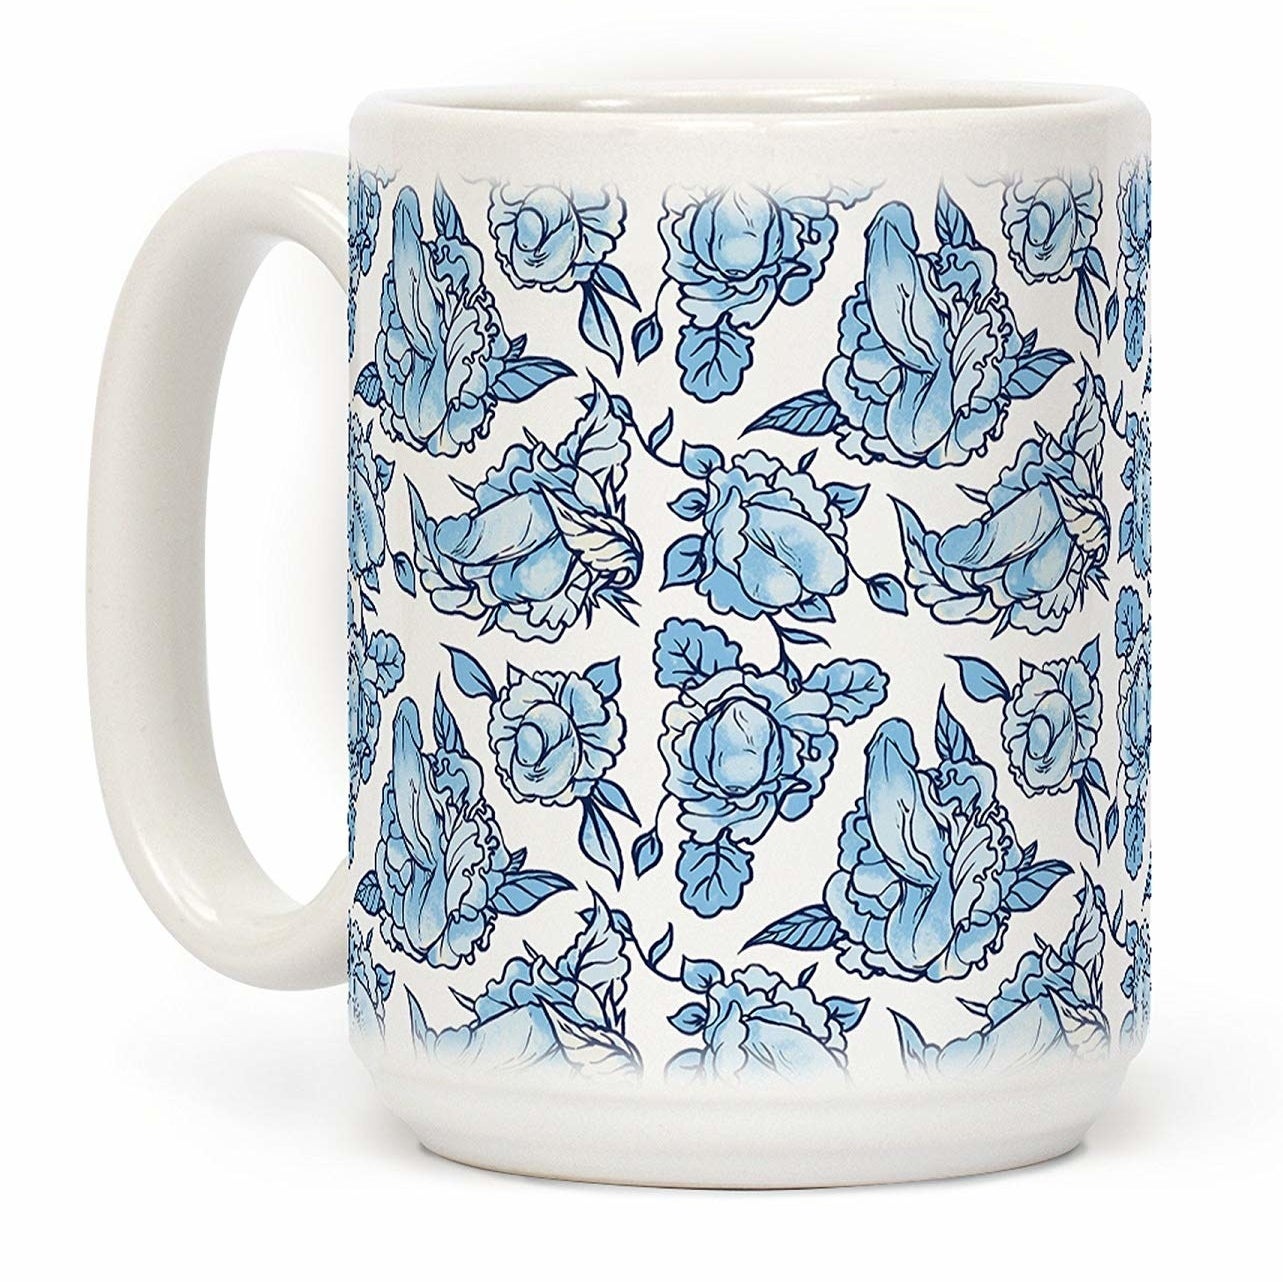 the white mug with blue penis flower design